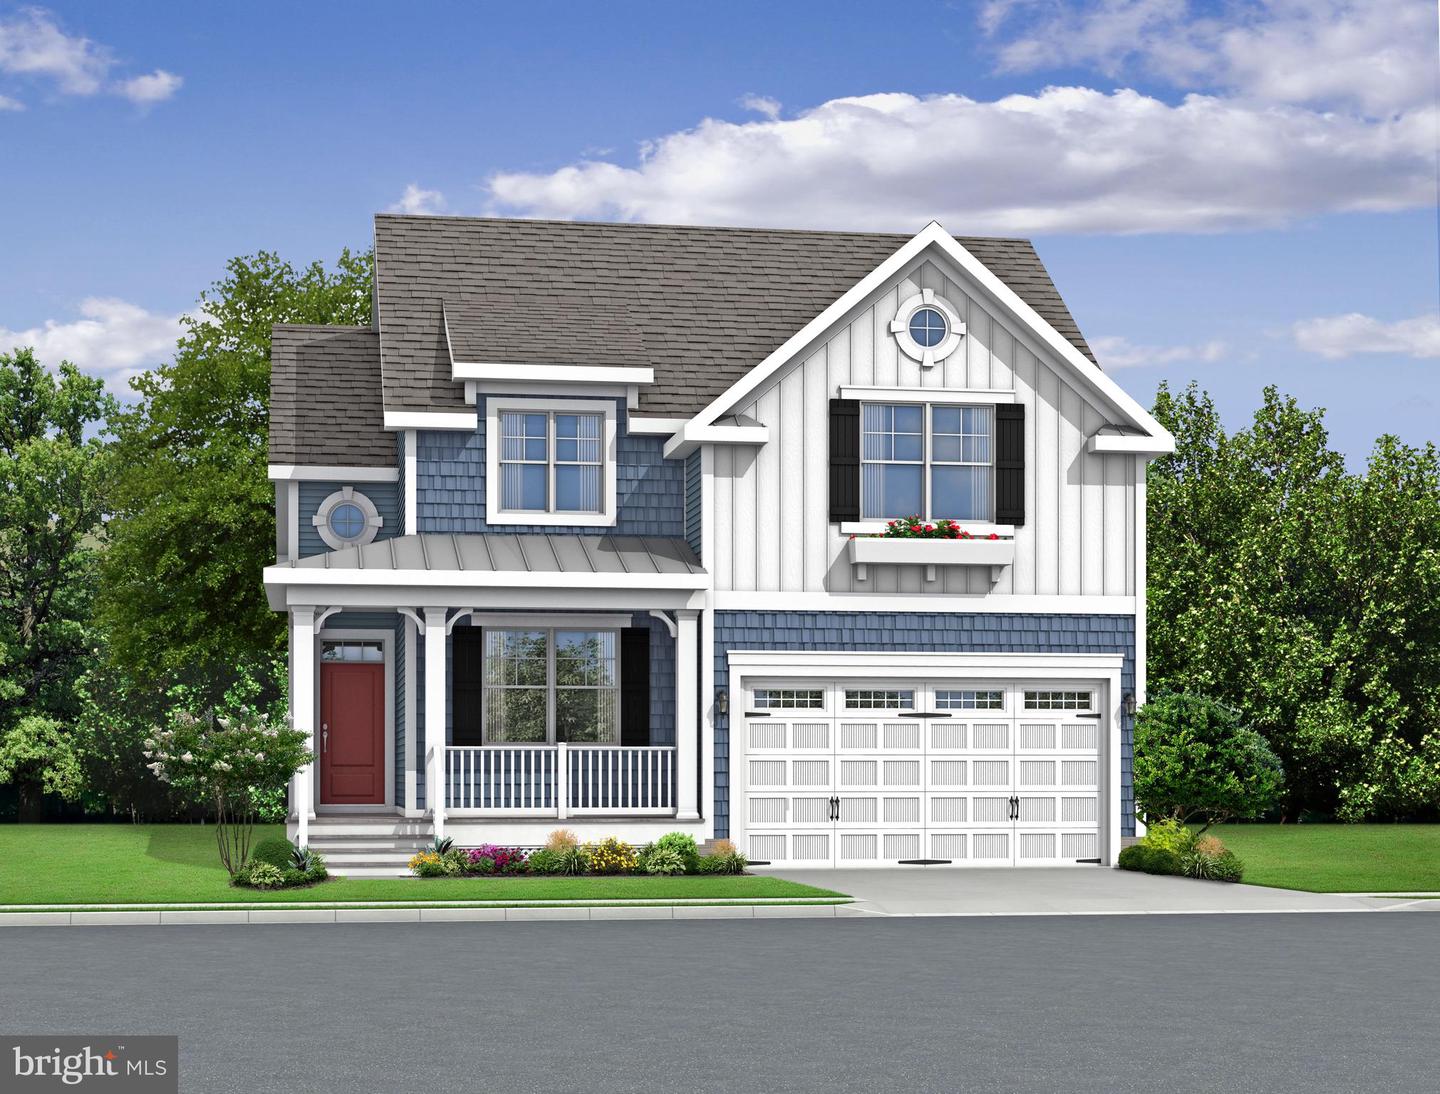 DESU2031440-801988062176-2022-11-02-11-01-30 Iris To-be-built Home Tbd | Millsboro, DE Real Estate For Sale | MLS# Desu2031440  - Jack Lingo REALTOR